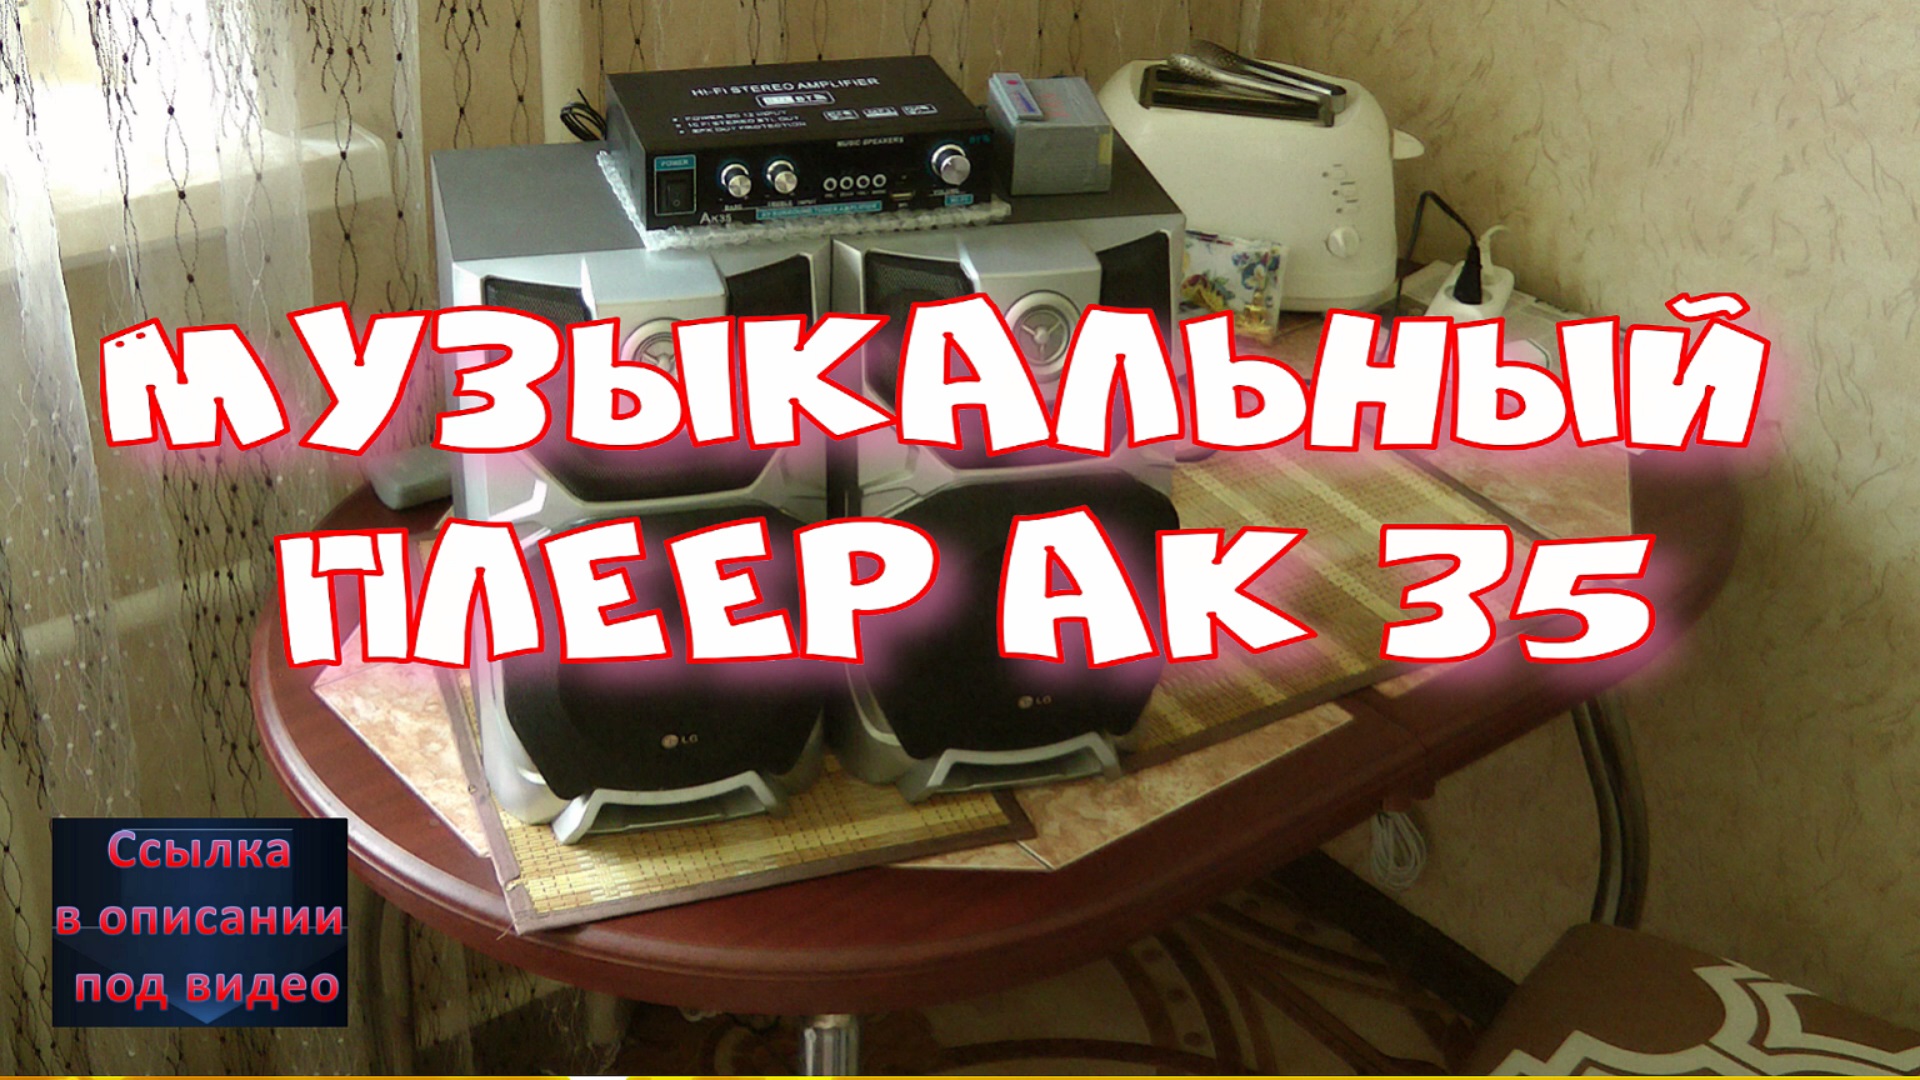 Музыкальный плеер Ак 35. Music player Ak 35.